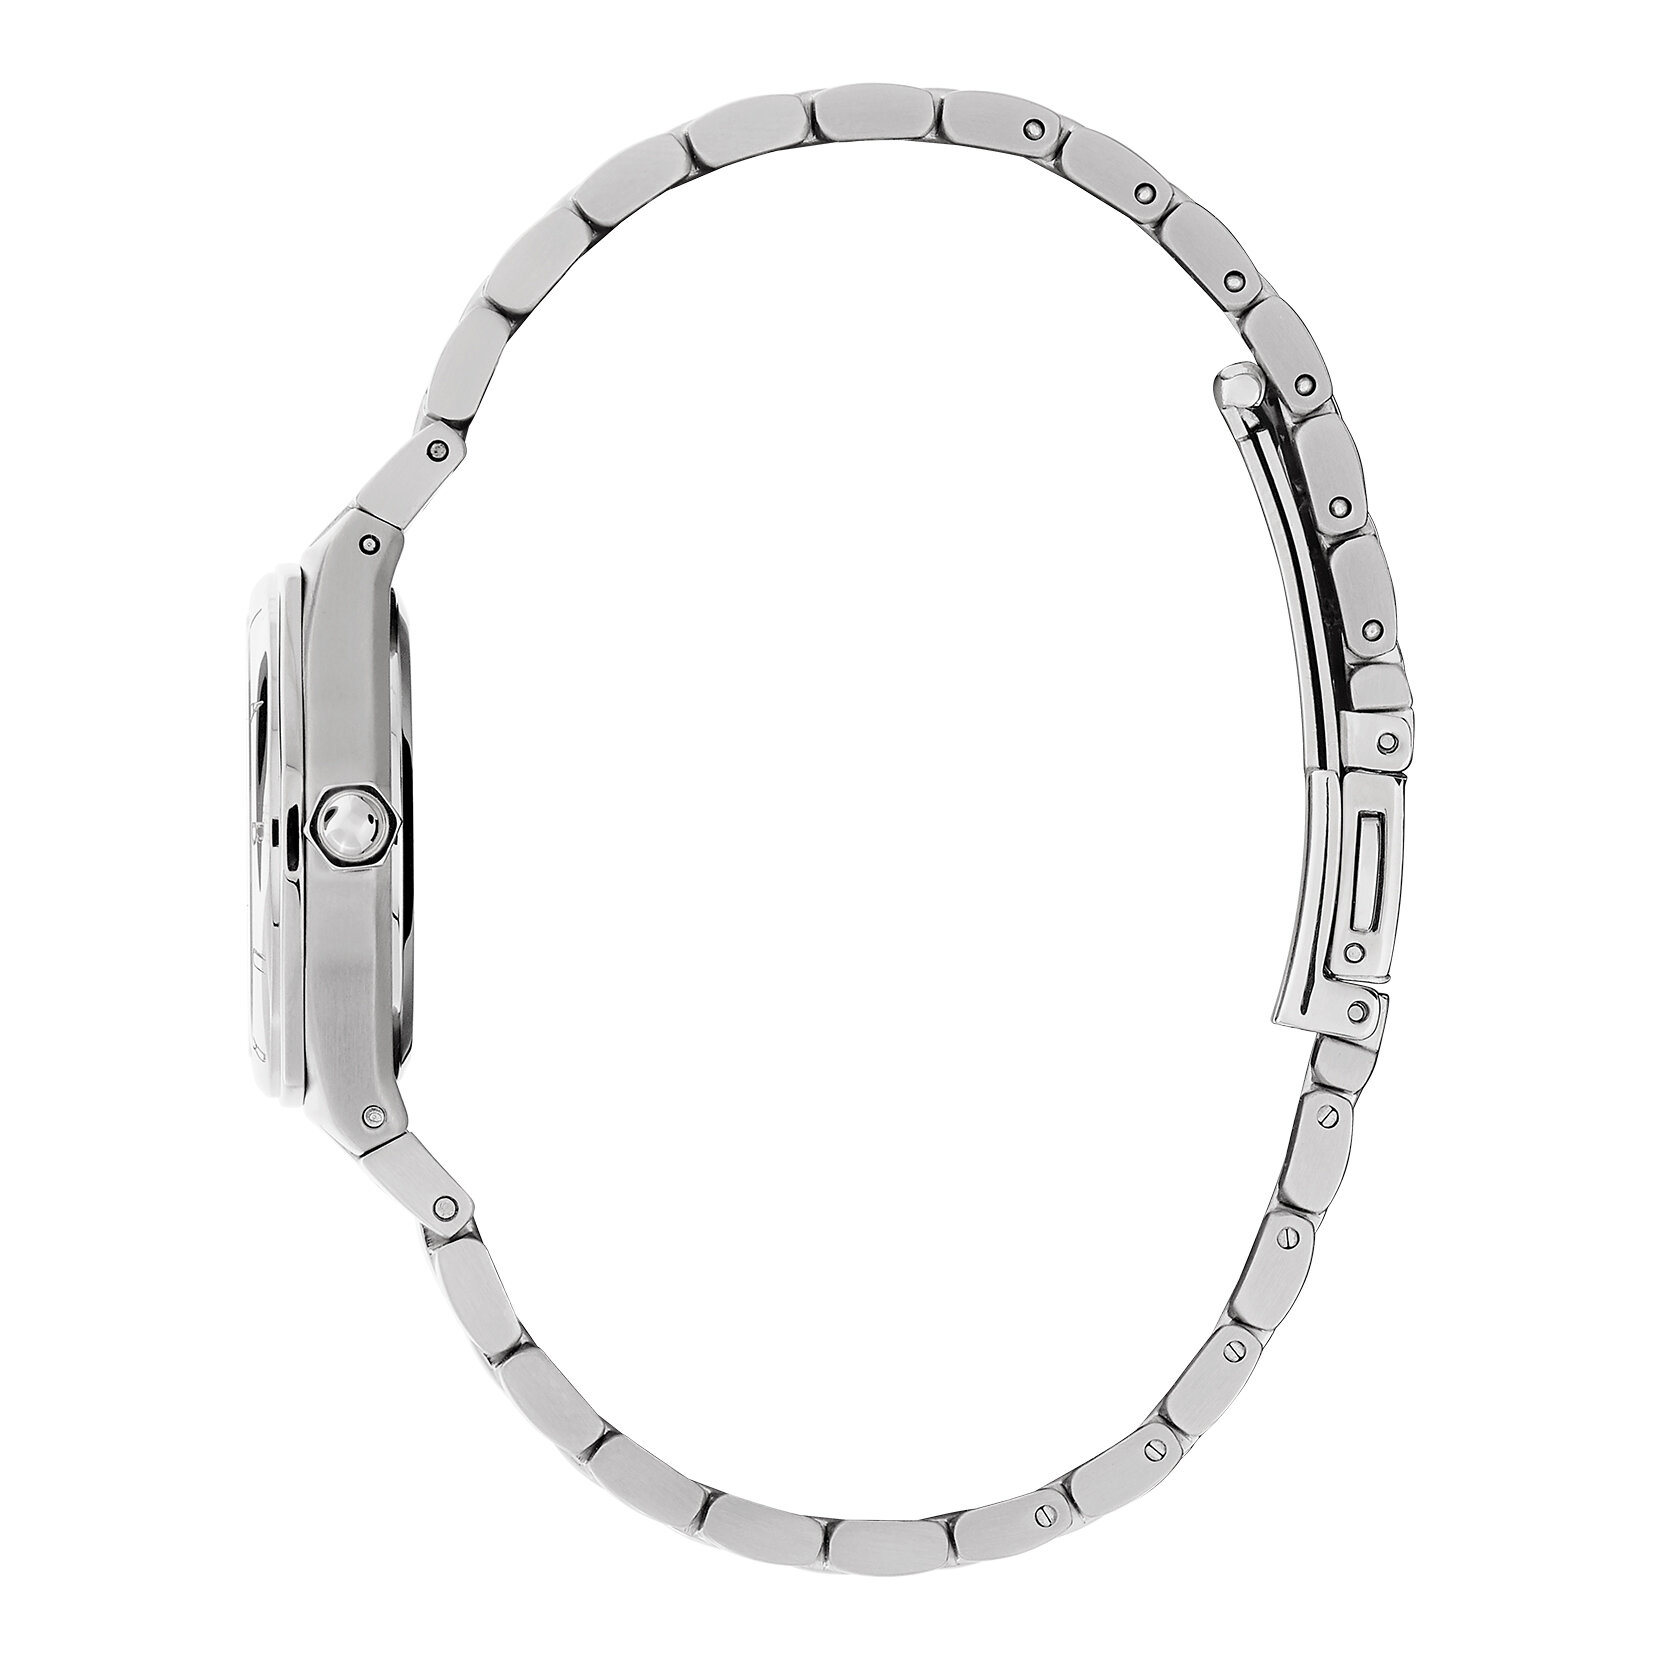 28mm Mini Hexa White & Silver Bracelet Watch